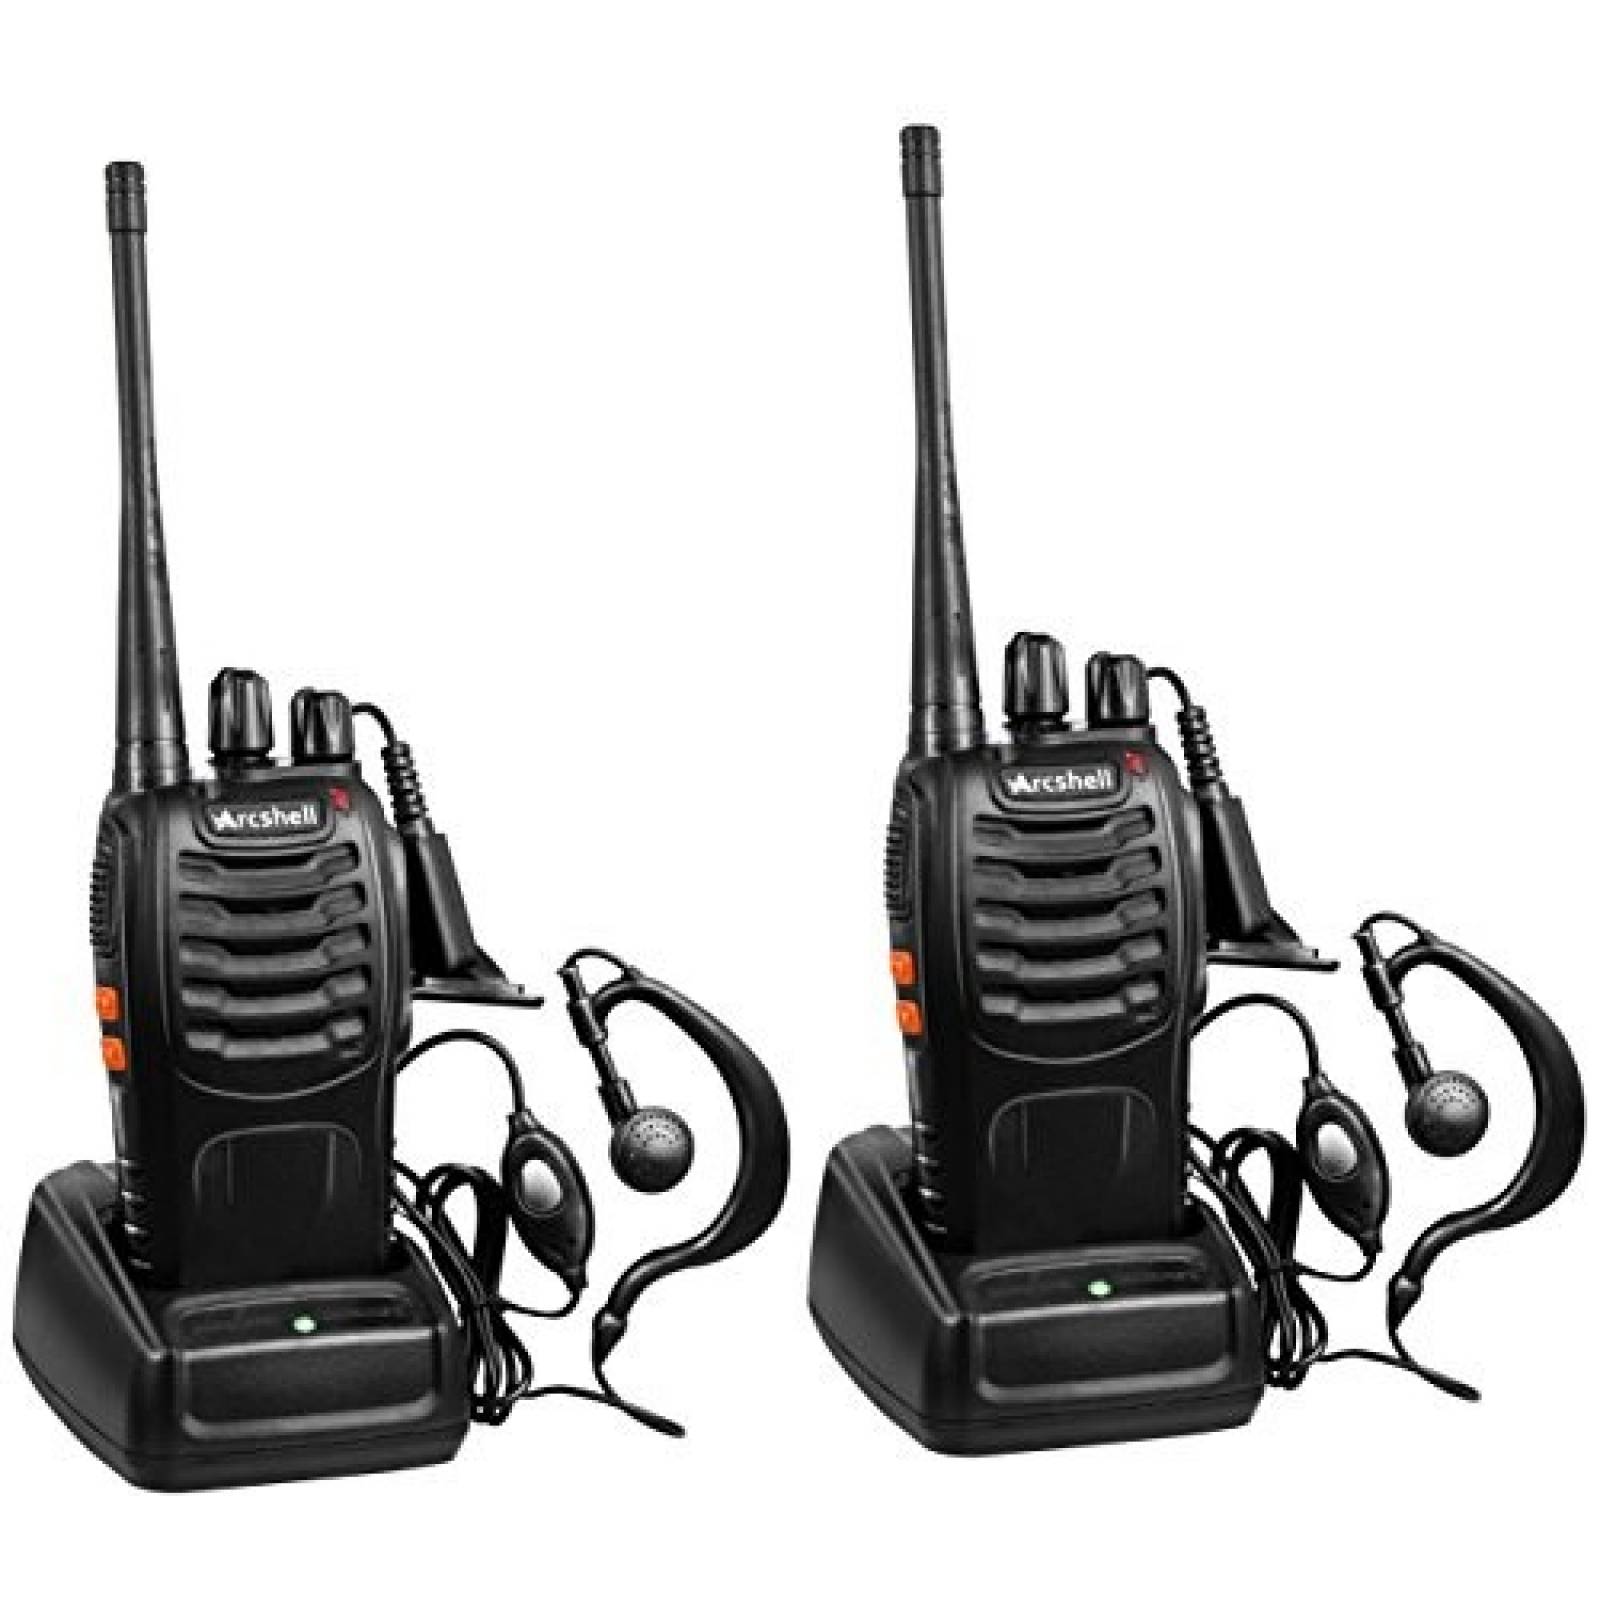 Kit 2 Radios de dos vías Arcshell UHF 400-470Mhz Auricular